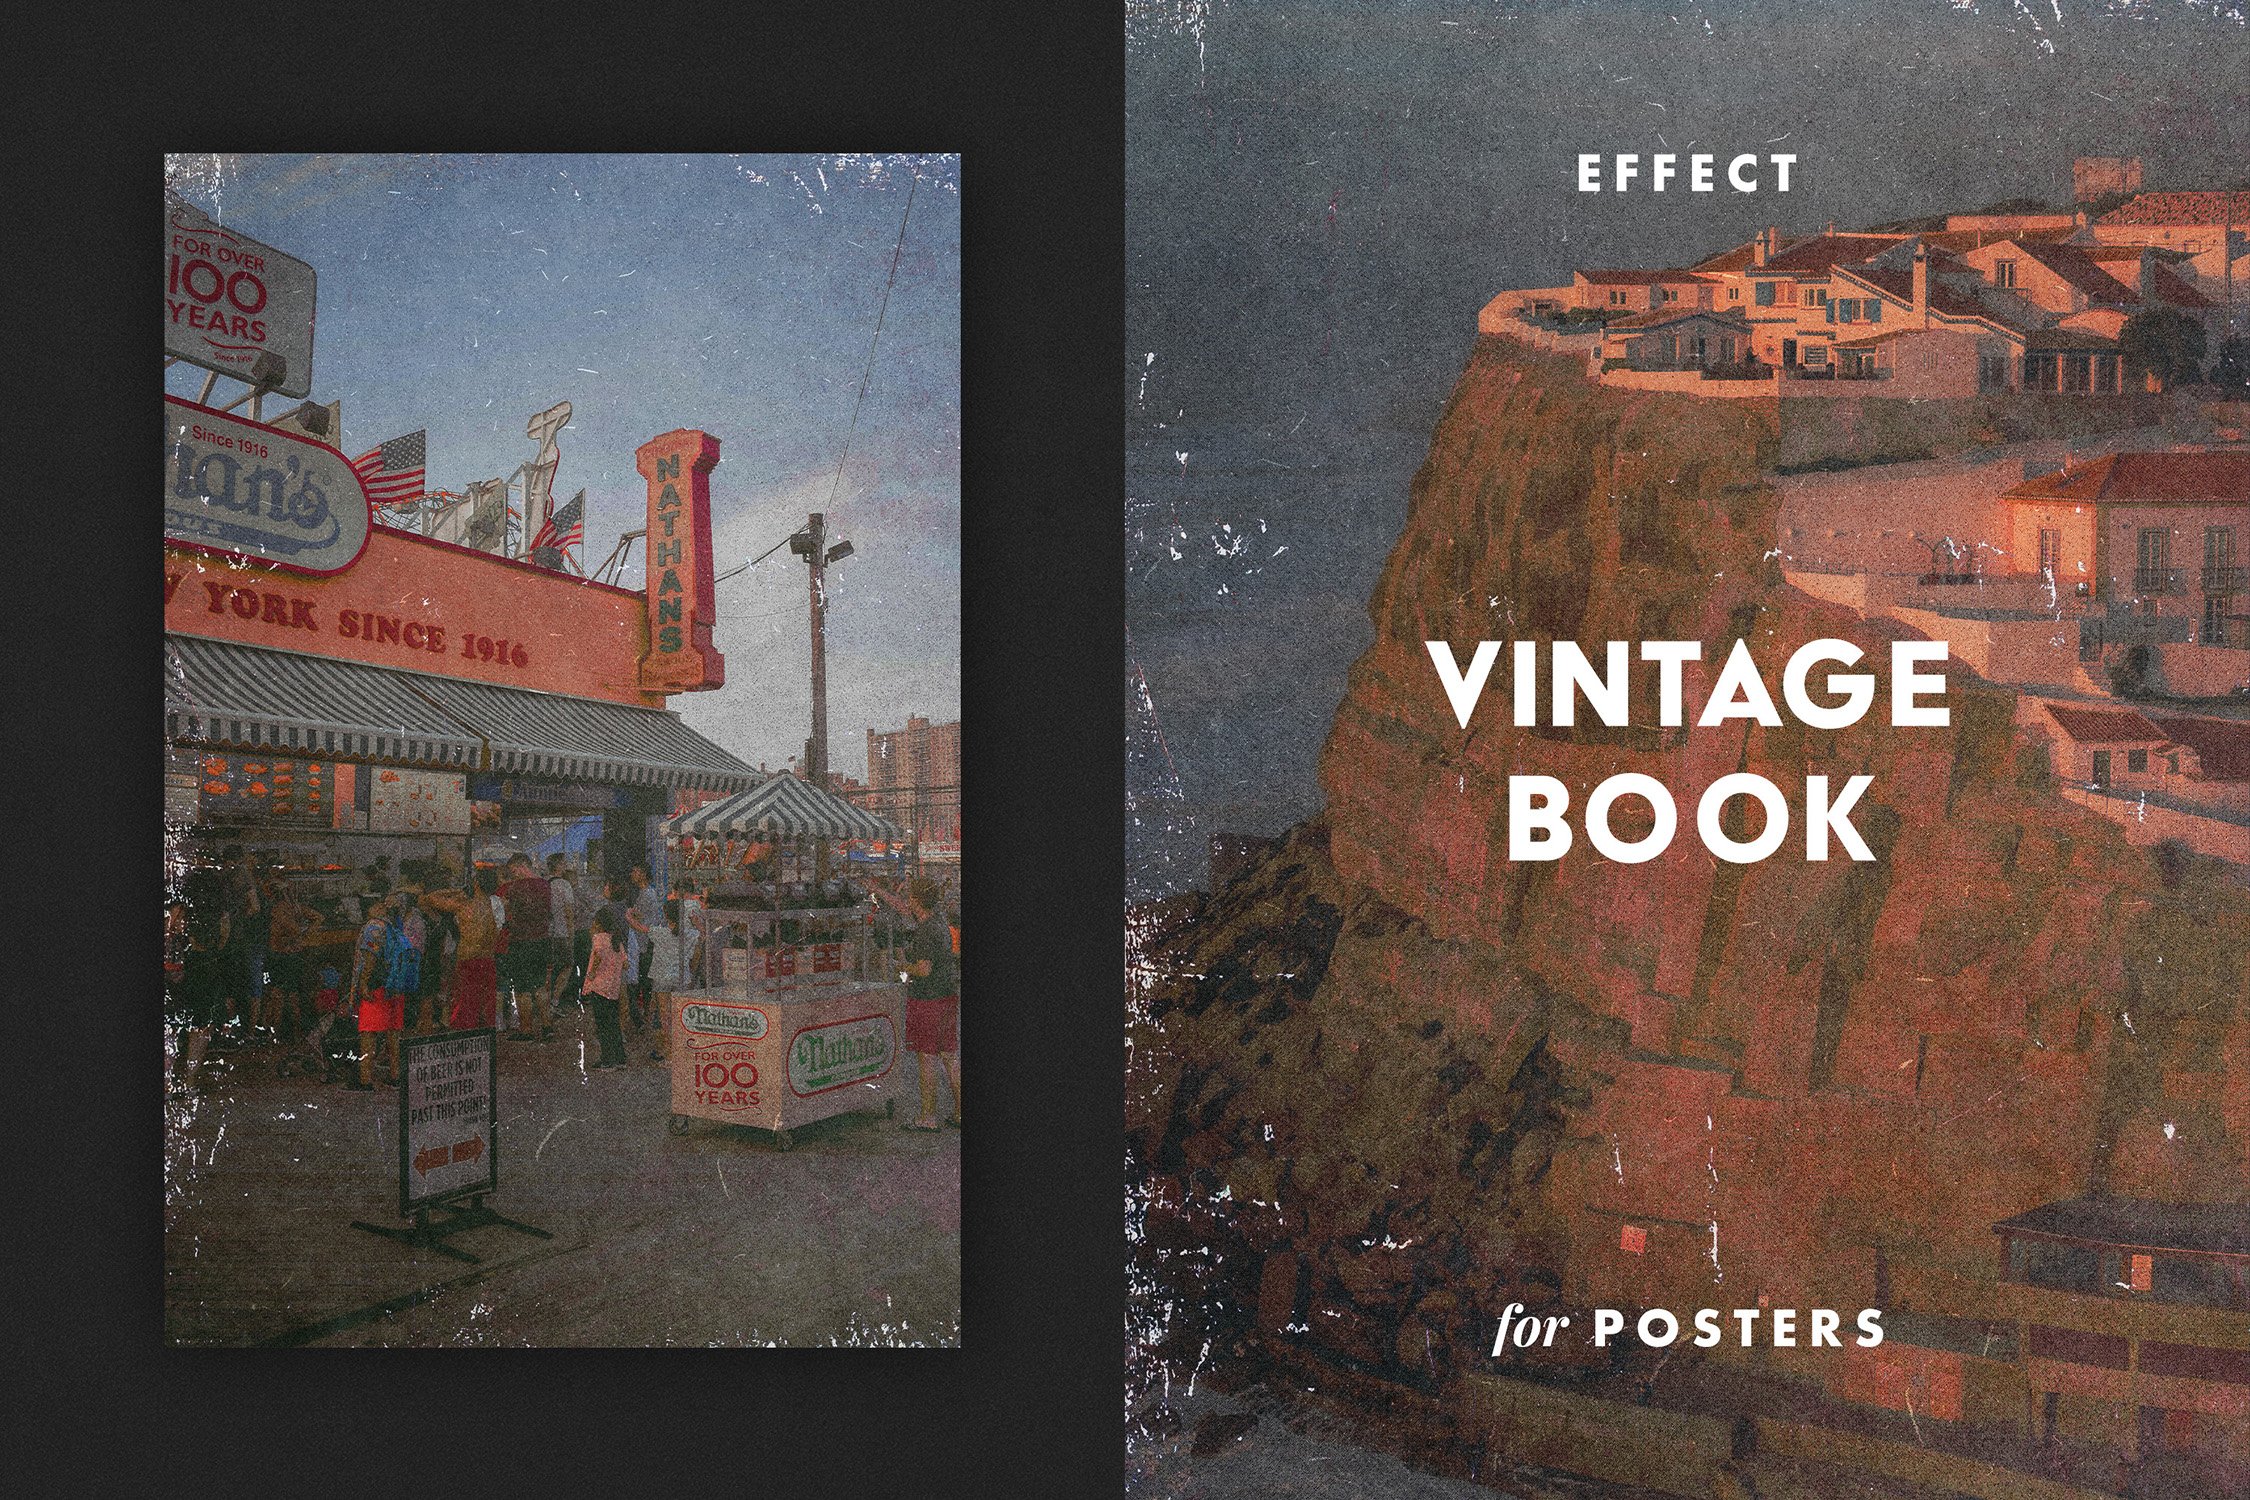 Vintage Book Effect for Posterscover image.